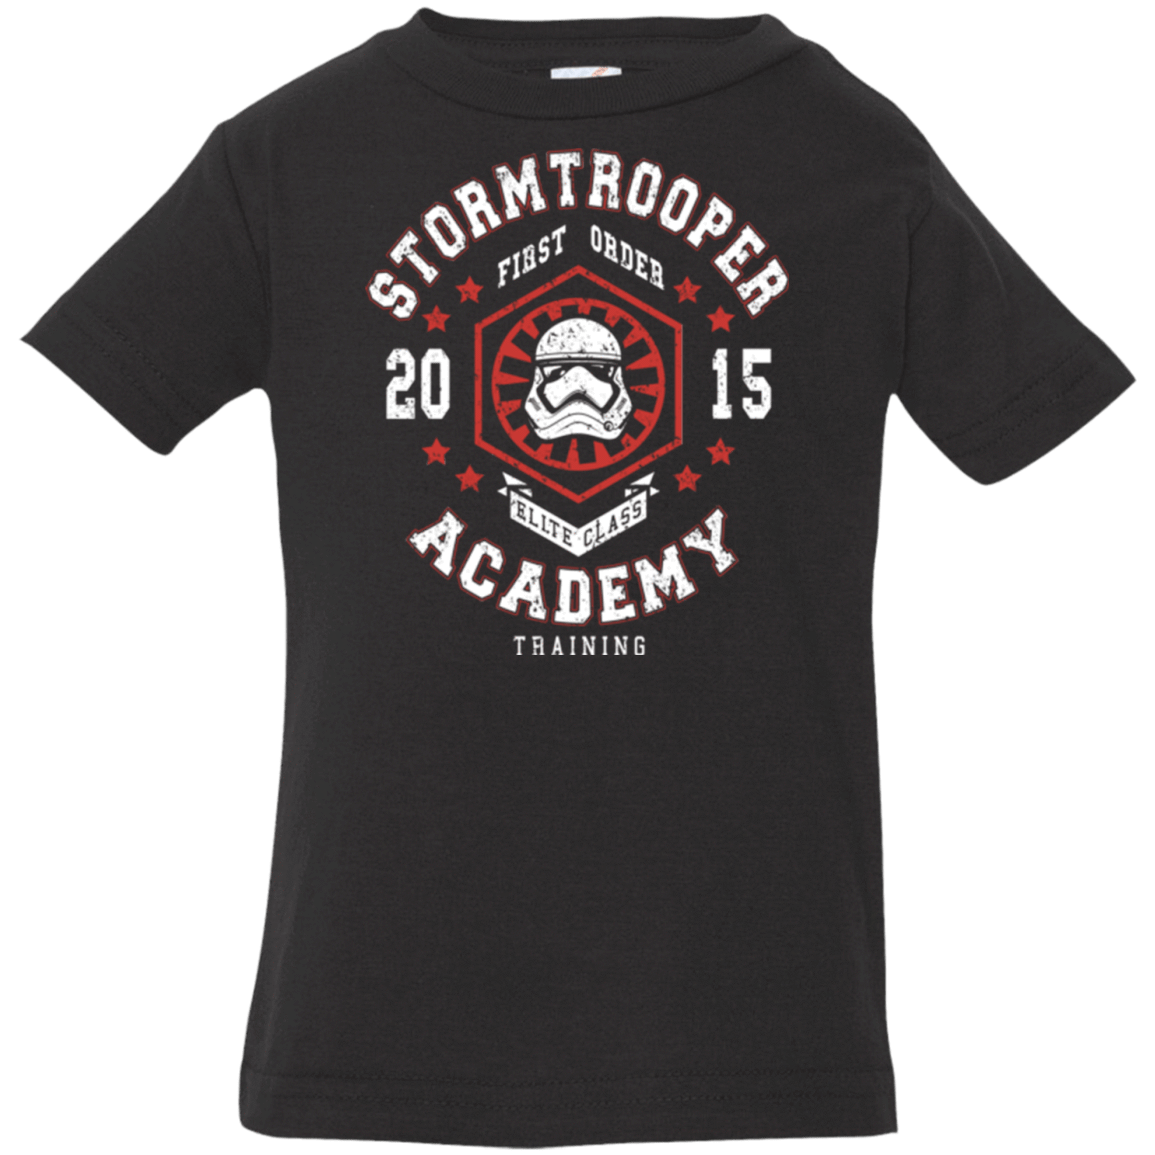 T-Shirts Black / 6 Months Stormtrooper Academy 15 Infant Premium T-Shirt